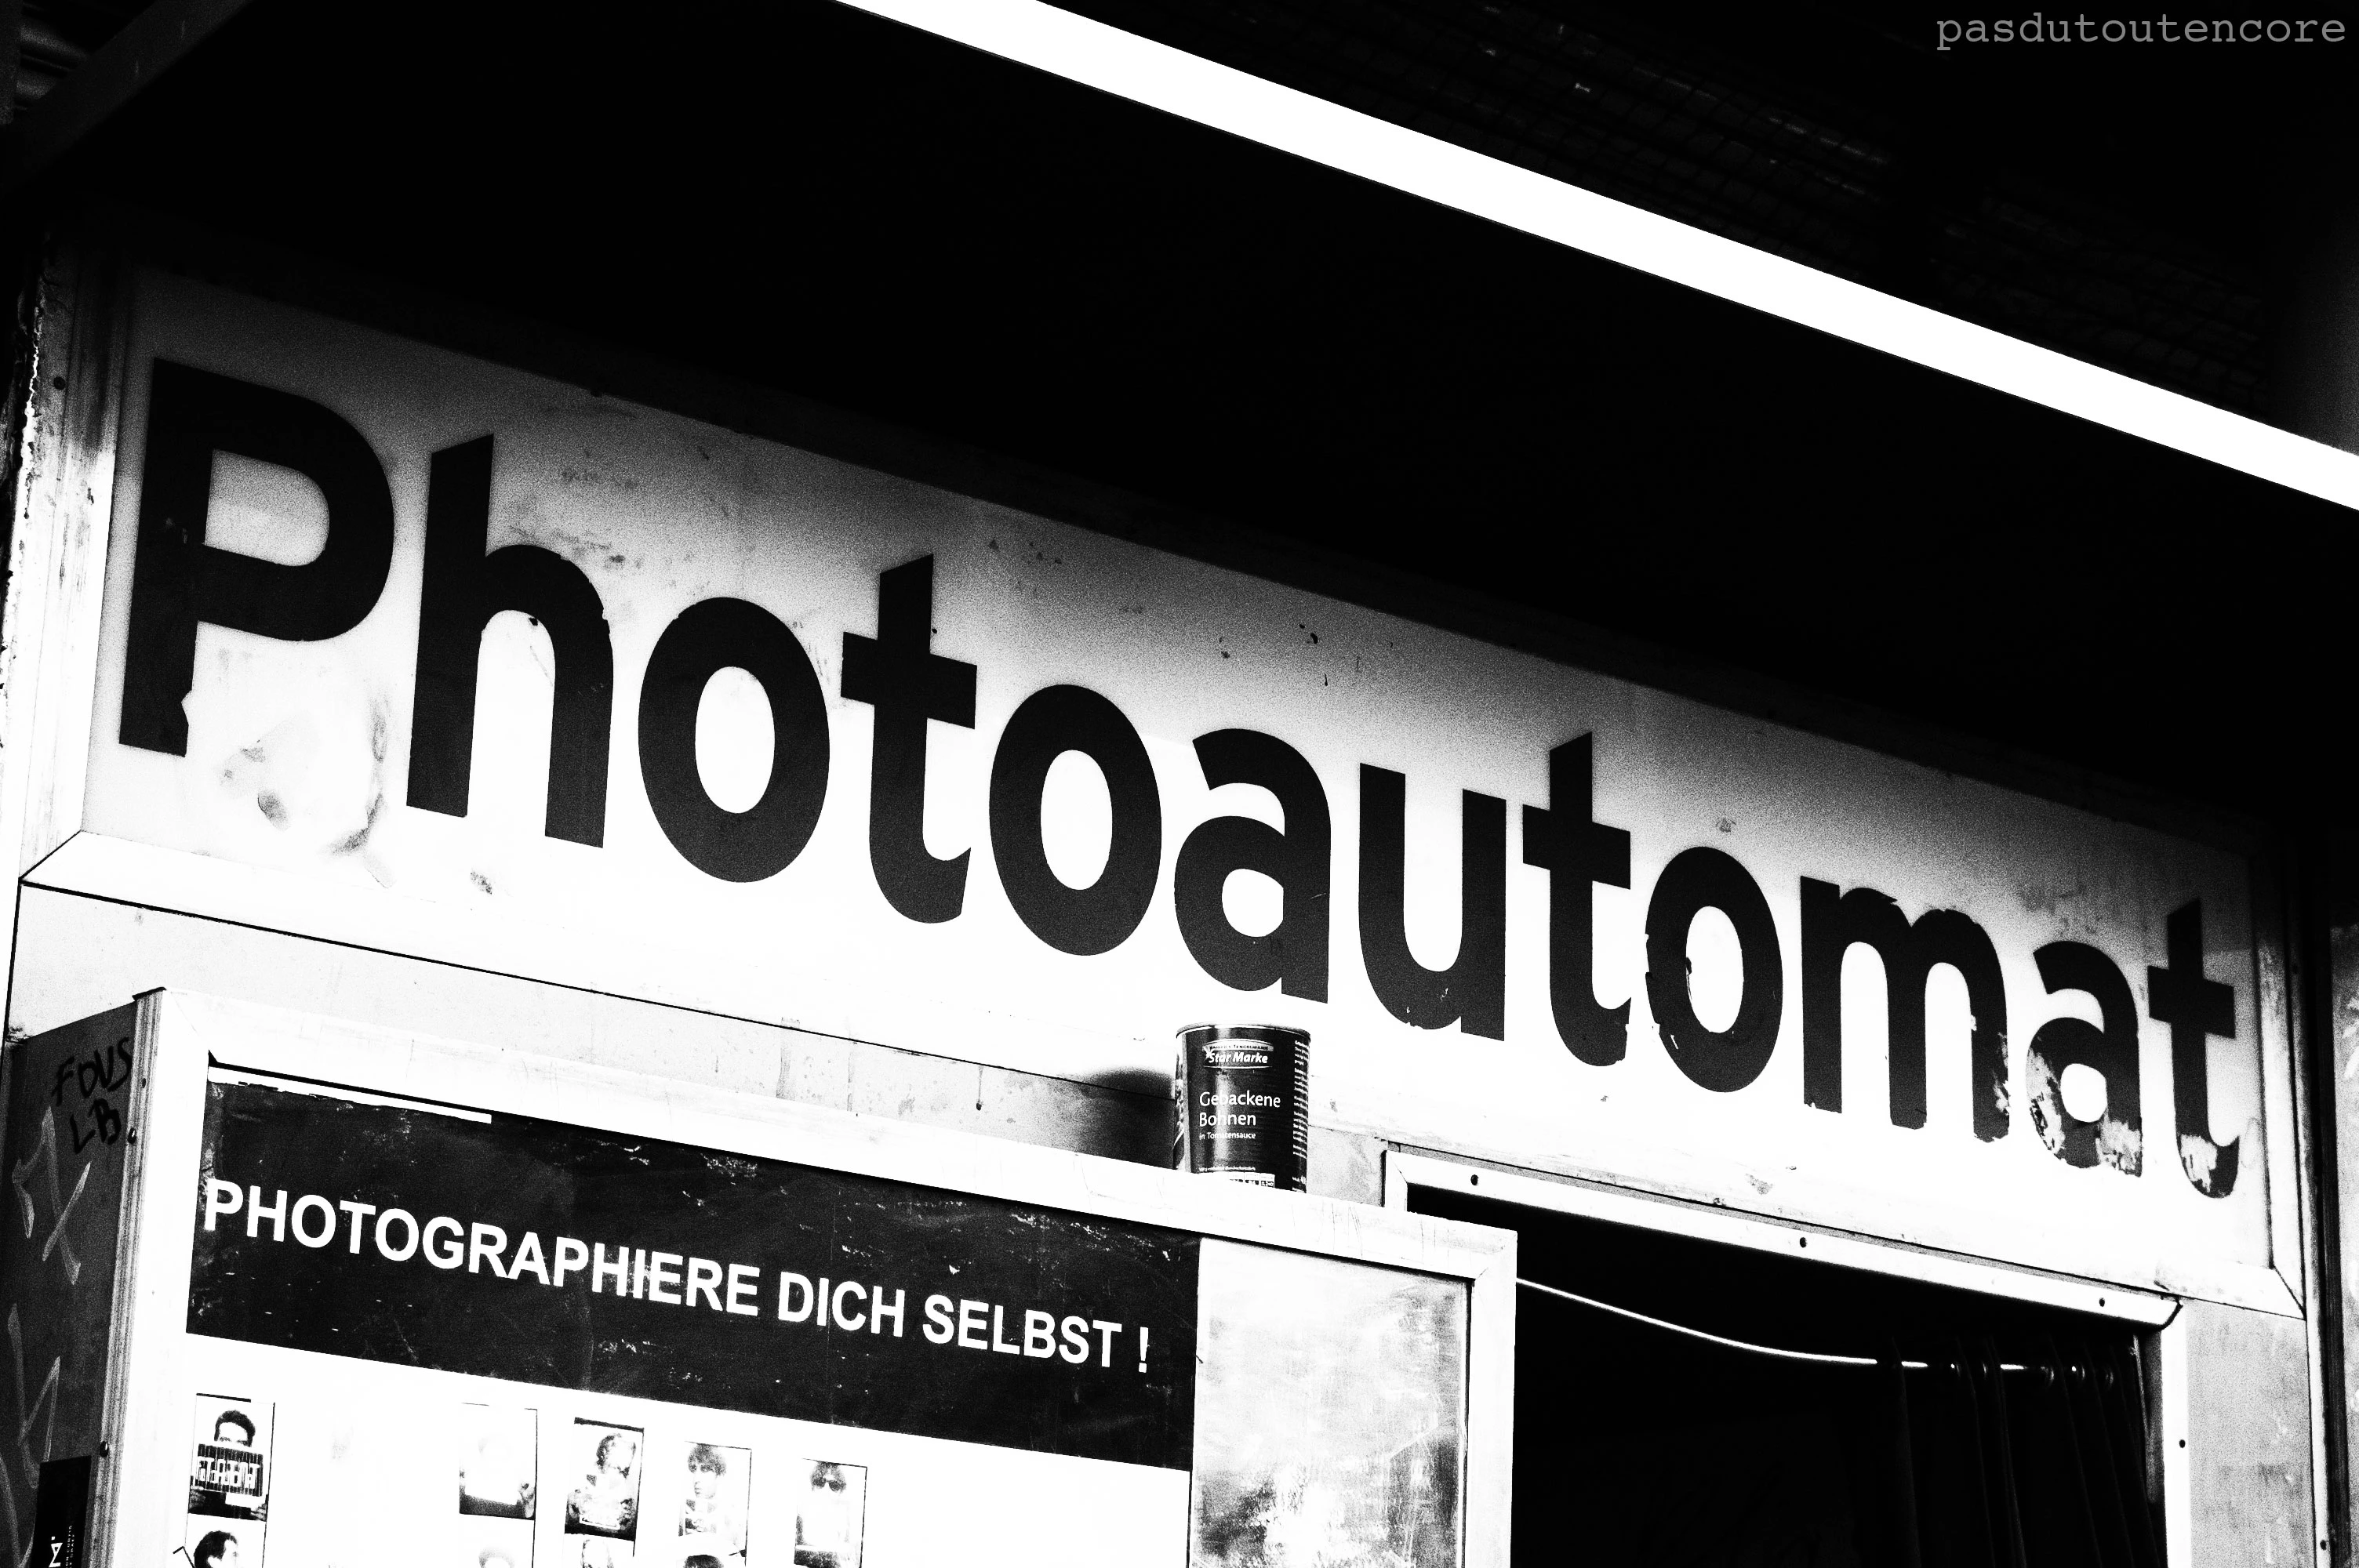 Das photoautomat